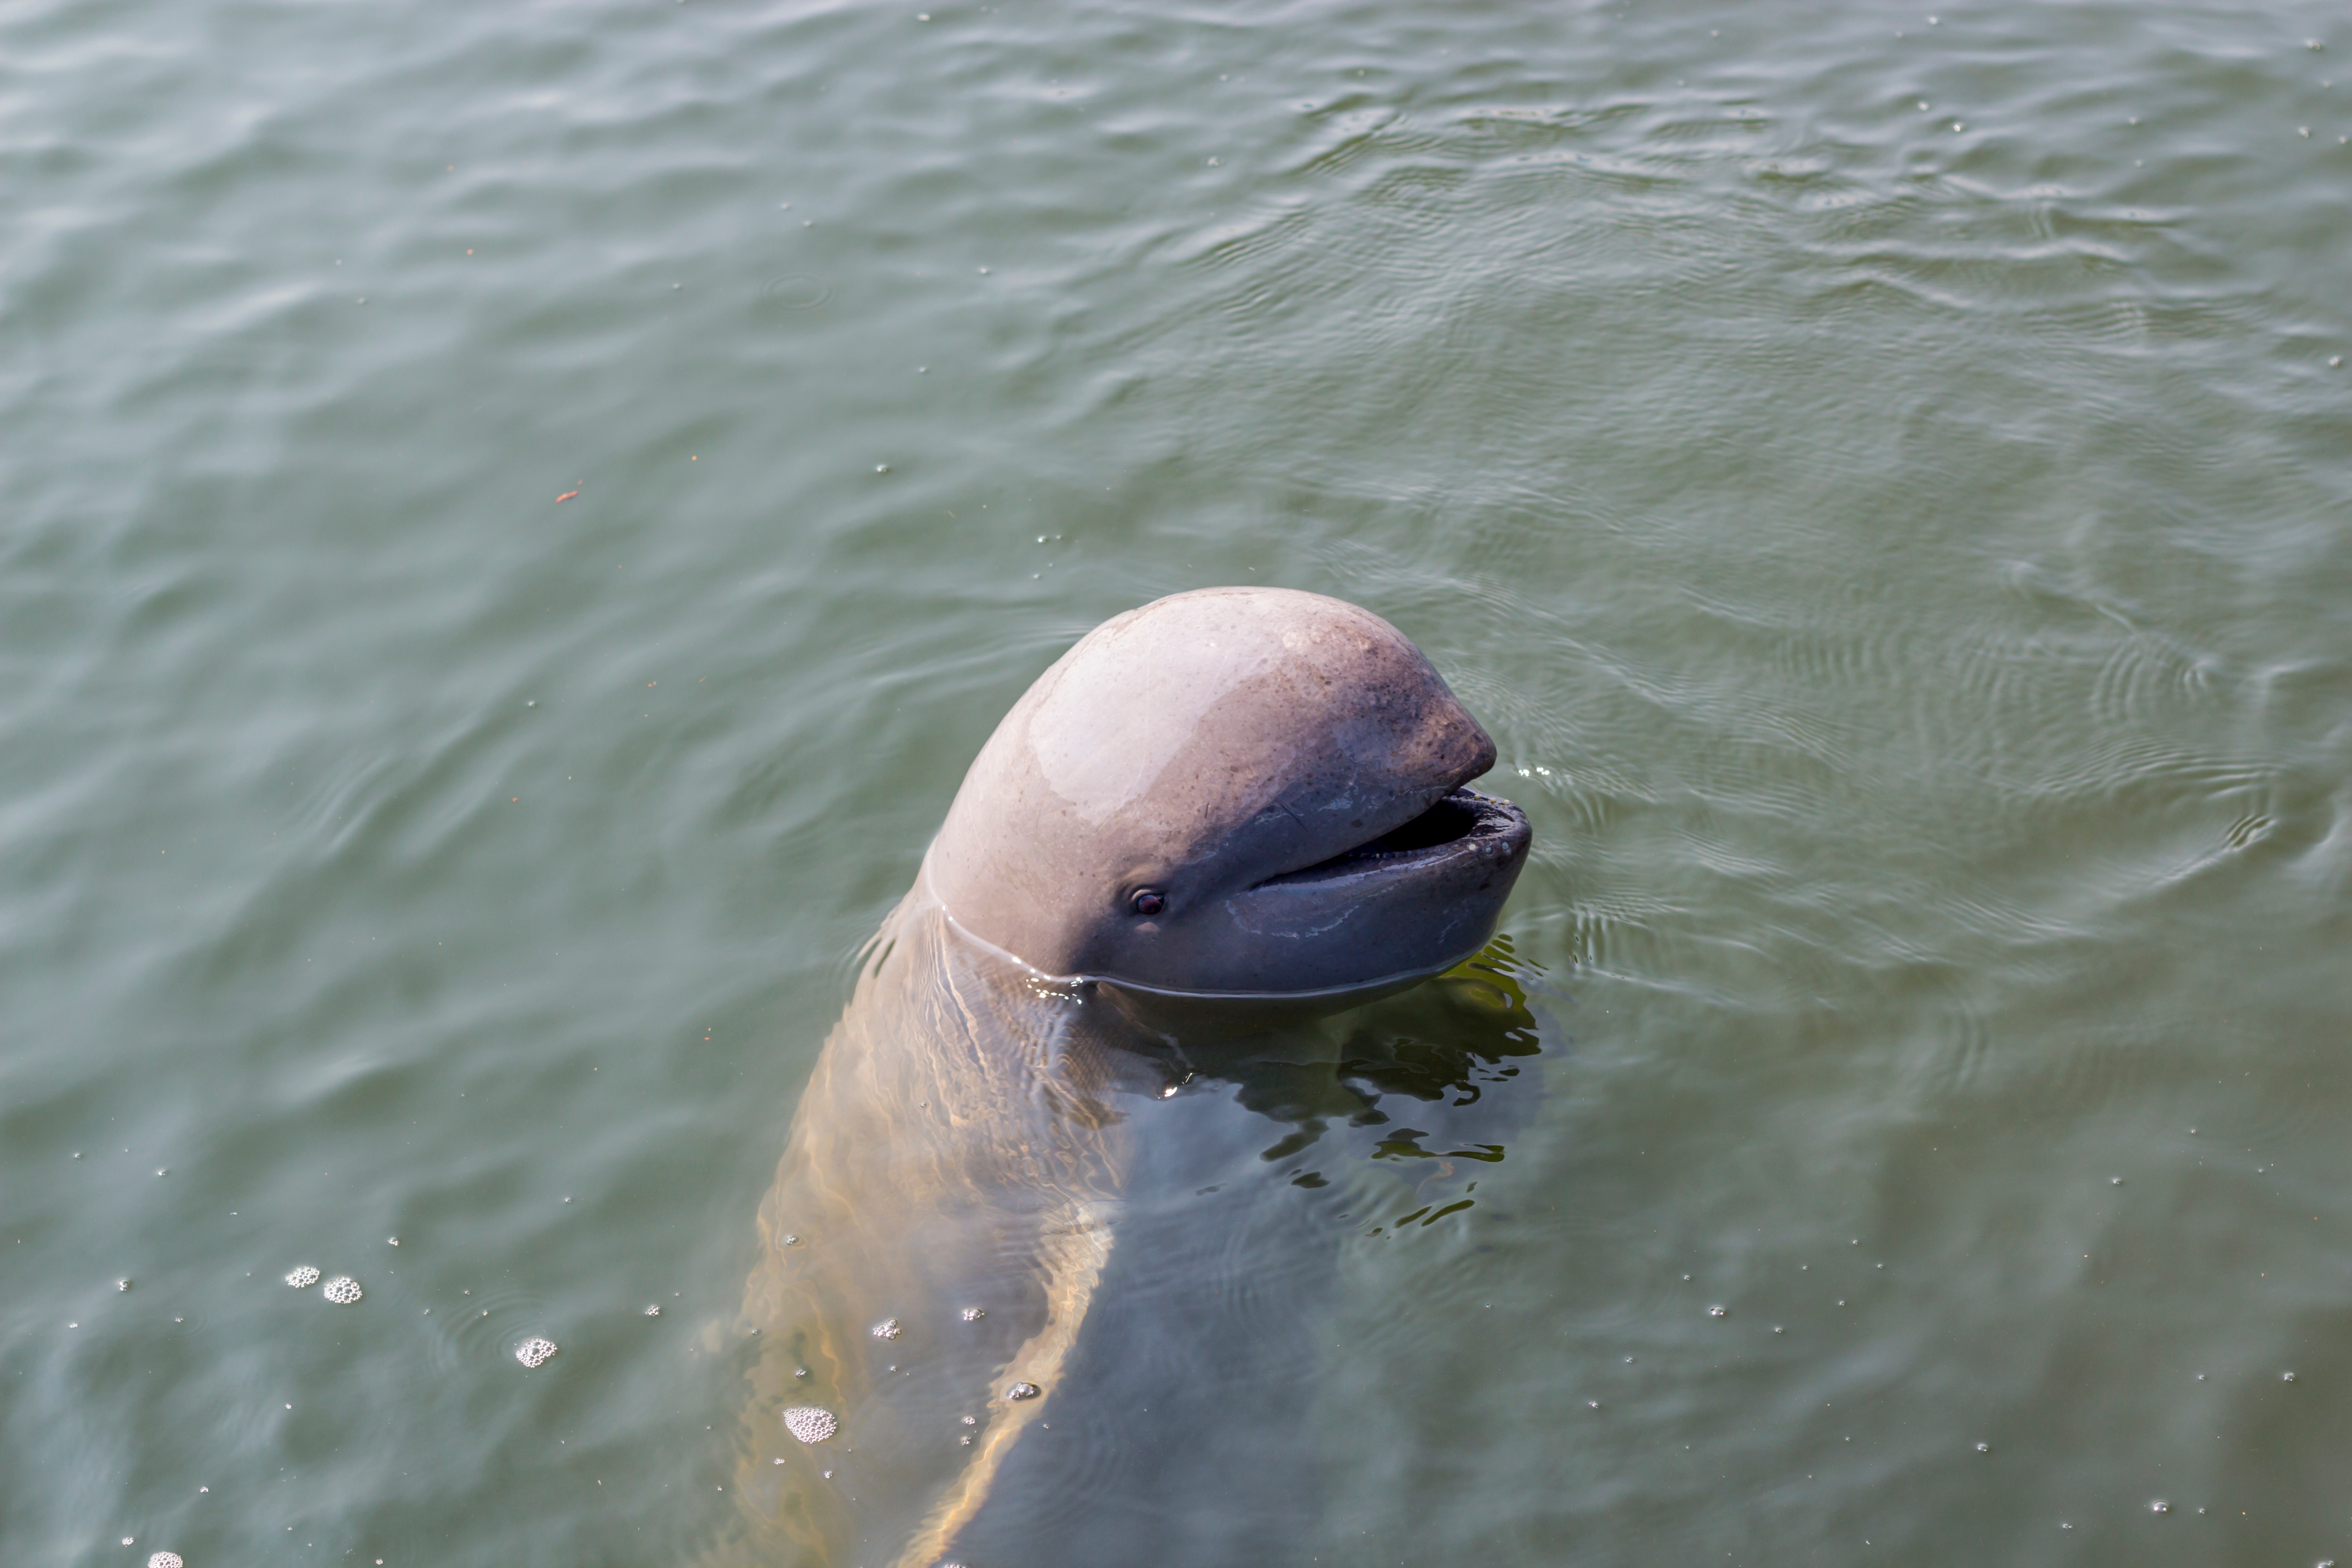 An Irrawaddy dolphin in Myanmar. Photo: Shutterstock